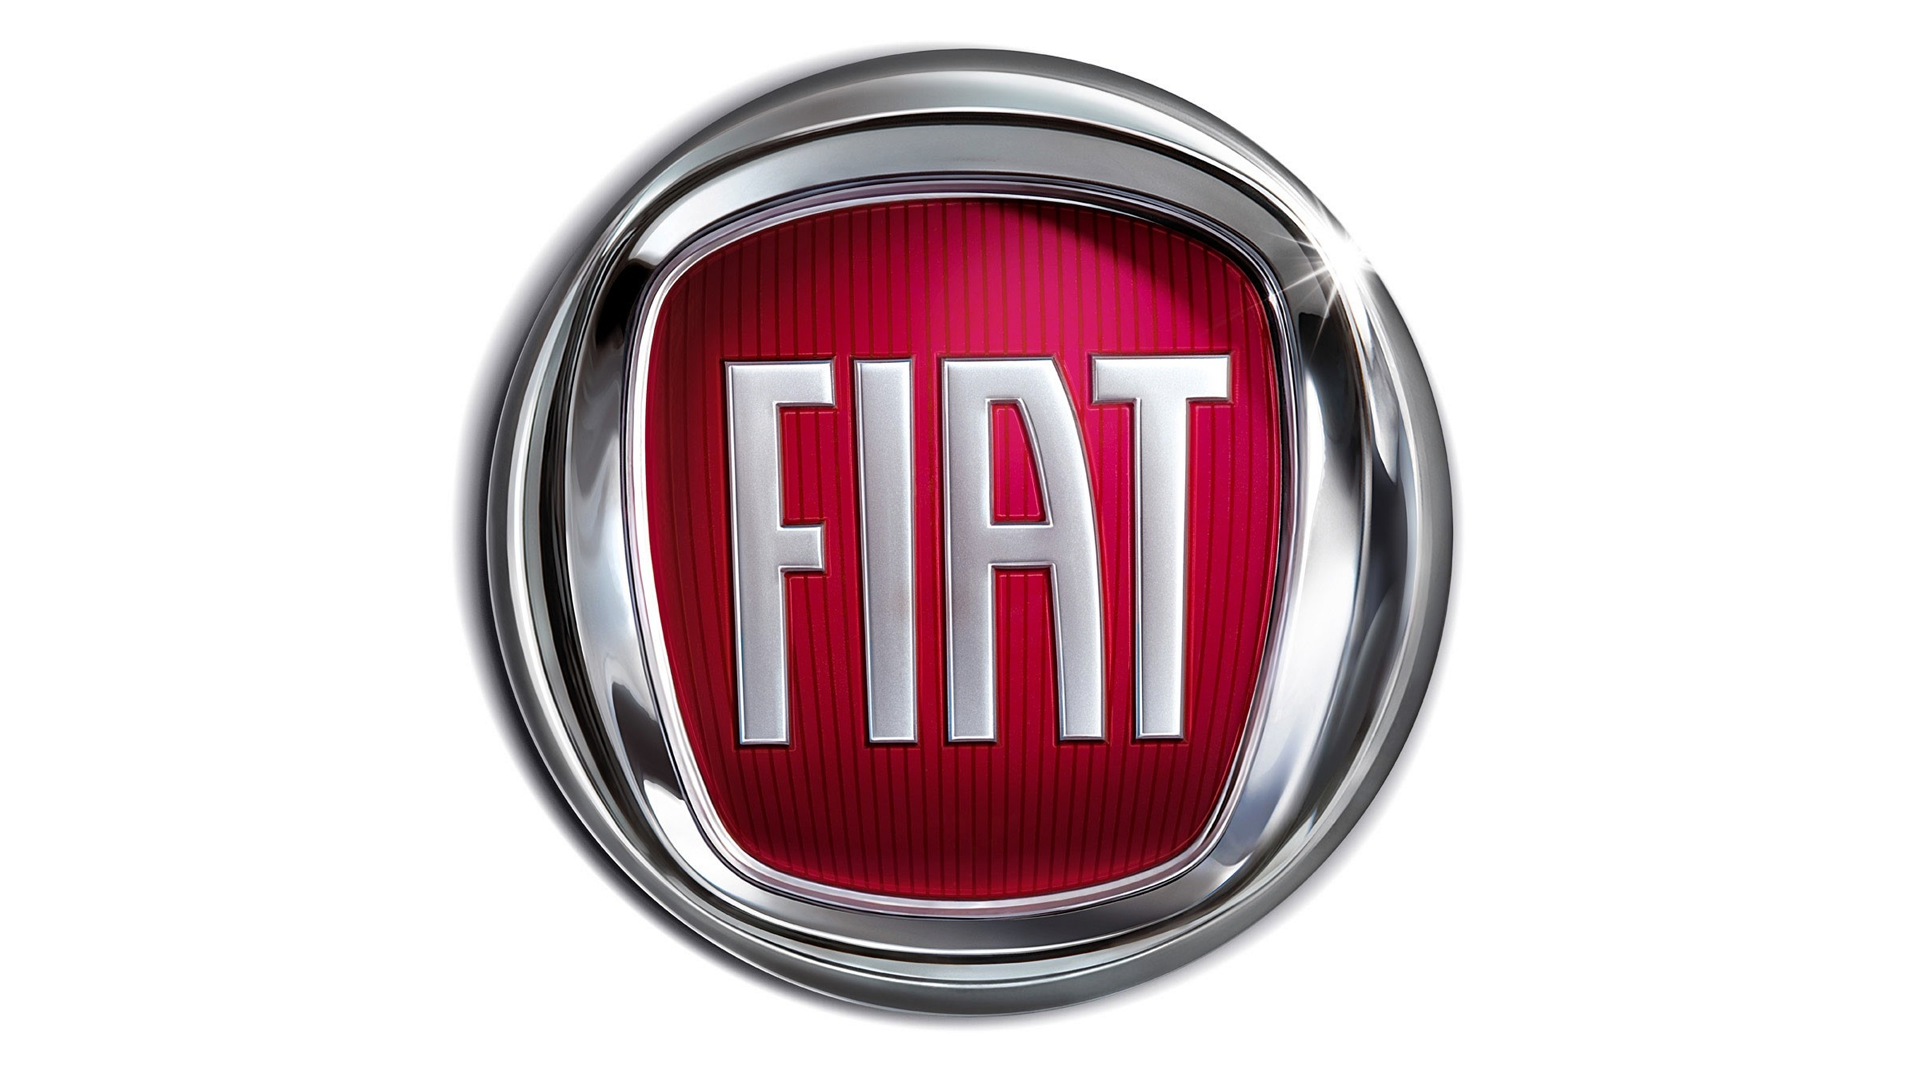 Fiat logo PNG imagen transparente